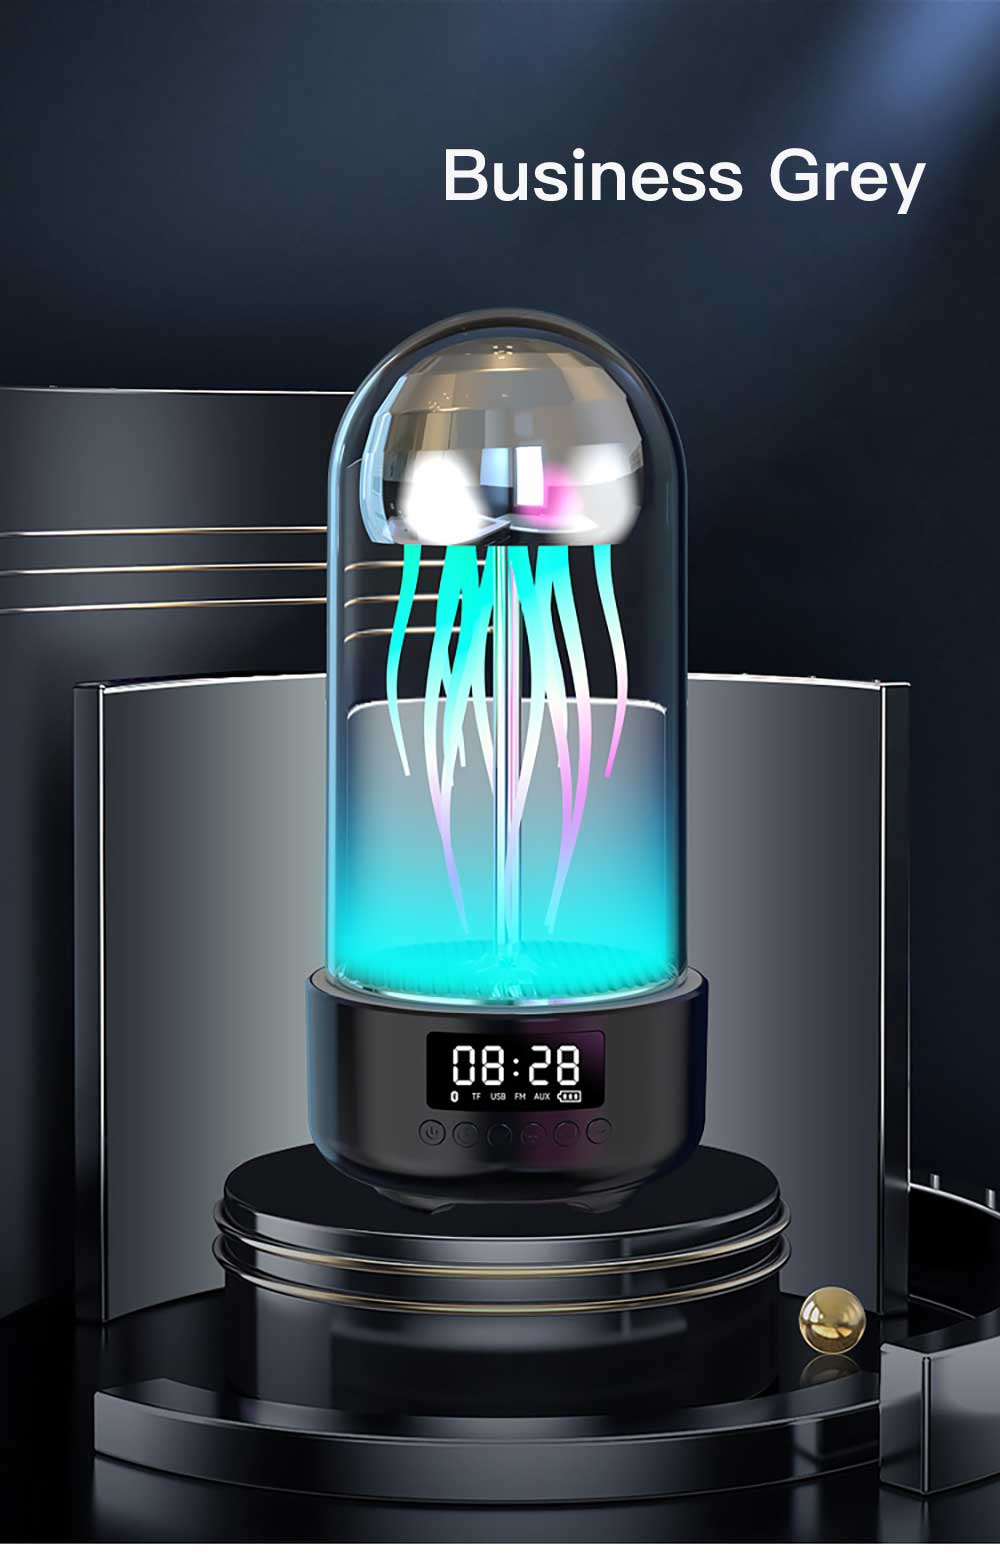 Jellyfish Bluetooth Speaker